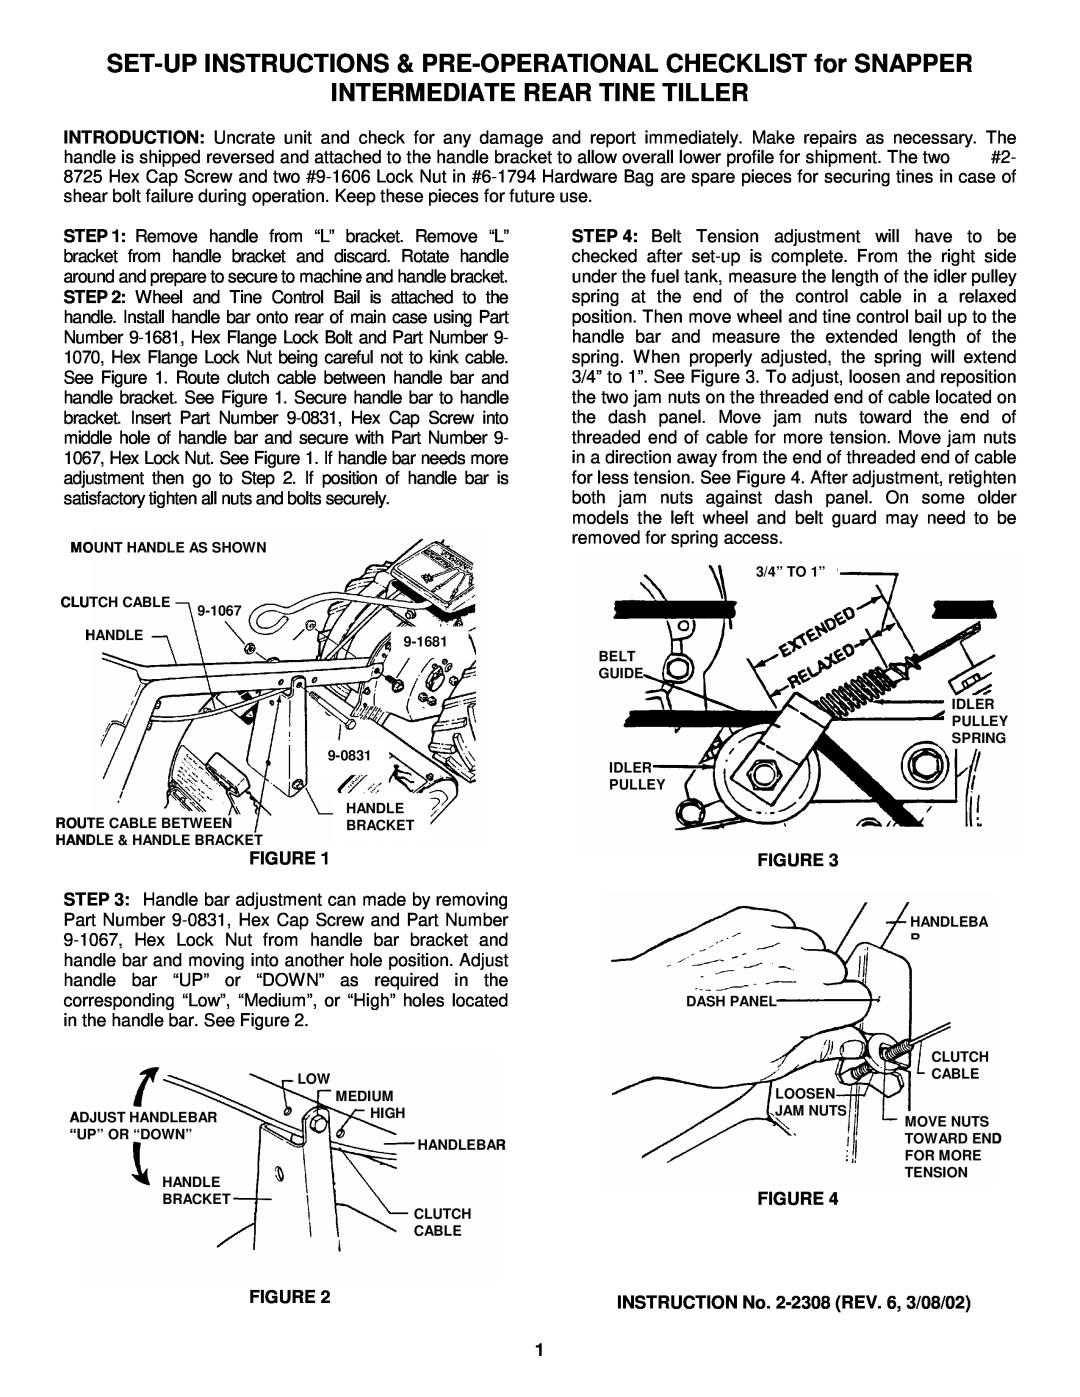 Snapper manual Intermediate Rear Tine Tiller, Figure, INSTRUCTION No. 2-2308REV. 6, 3/08/02 